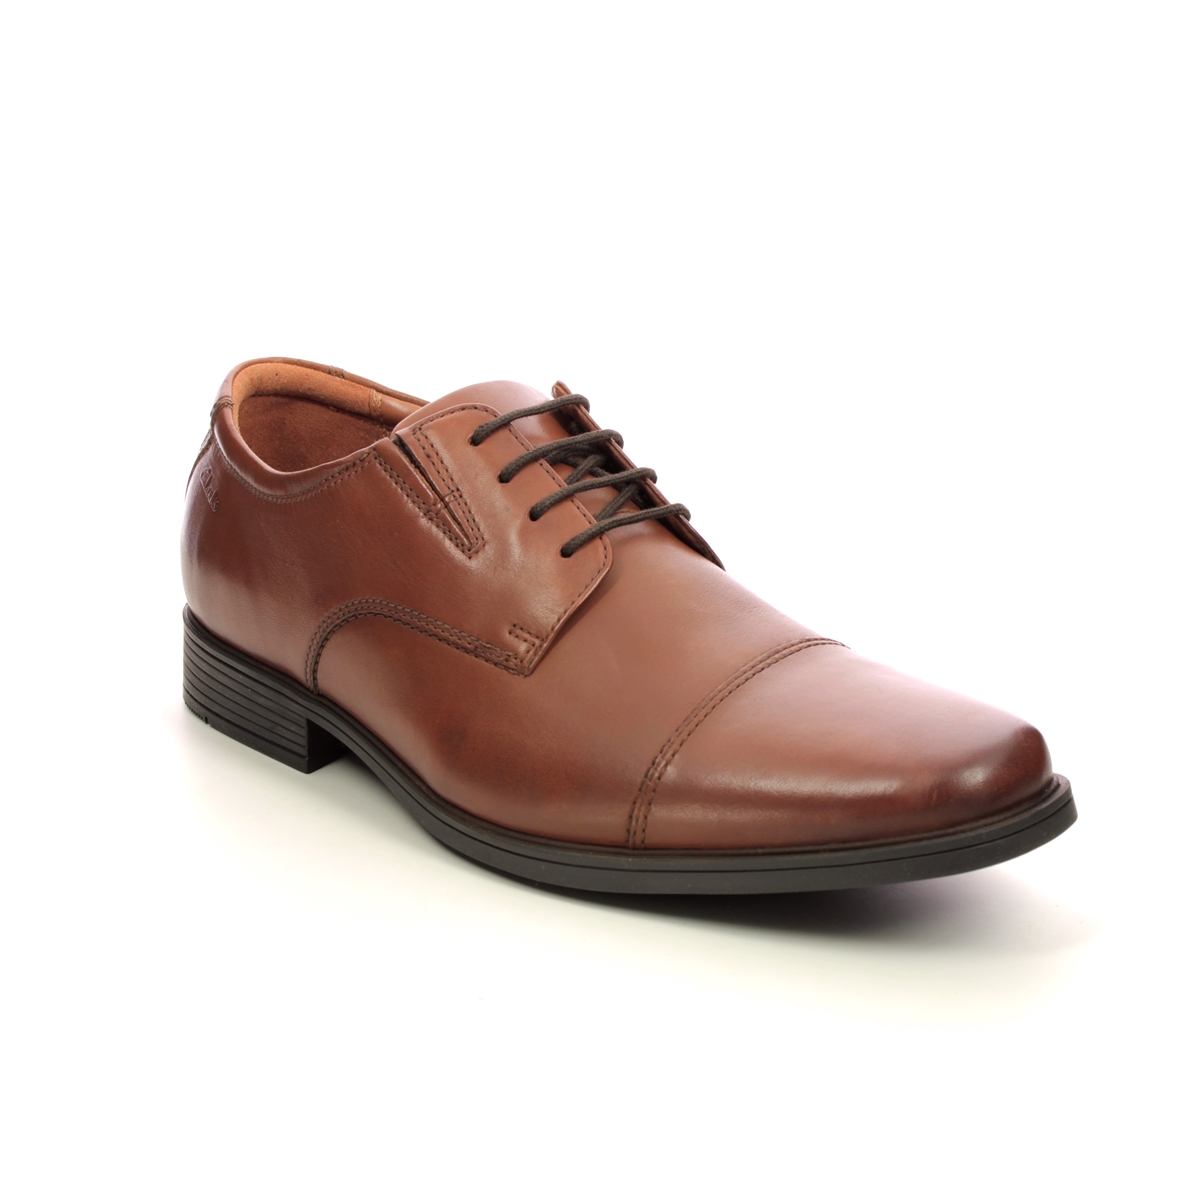 Clarks Tilden Cap Dark Tan Mens Formal Shoes 300968H In Size 8.5 In Plain Dark Tan H Width Fitting Extra Wide